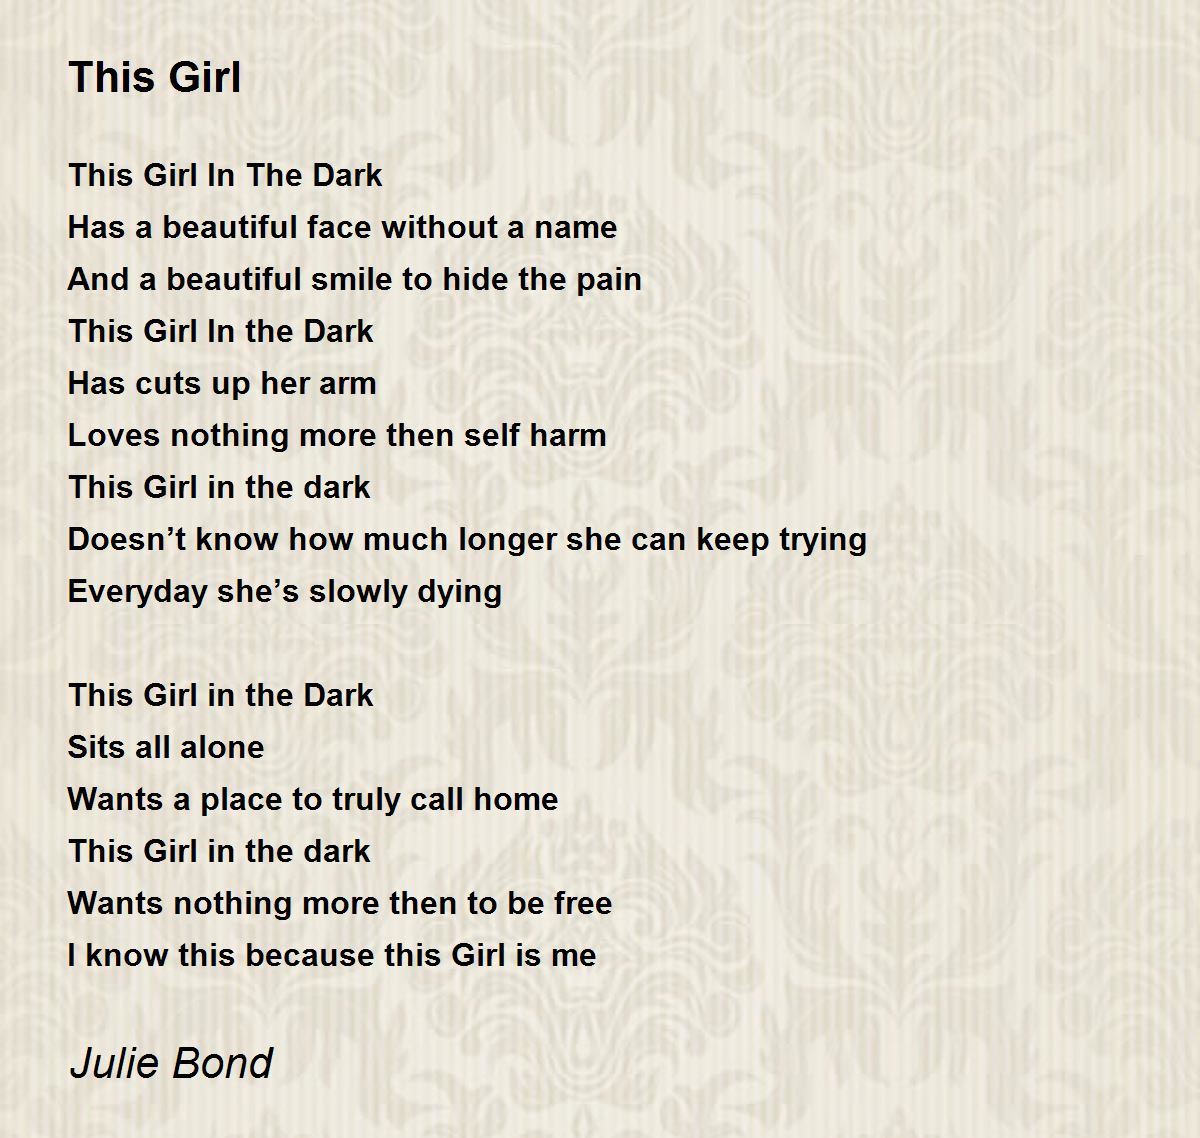 poems for girls